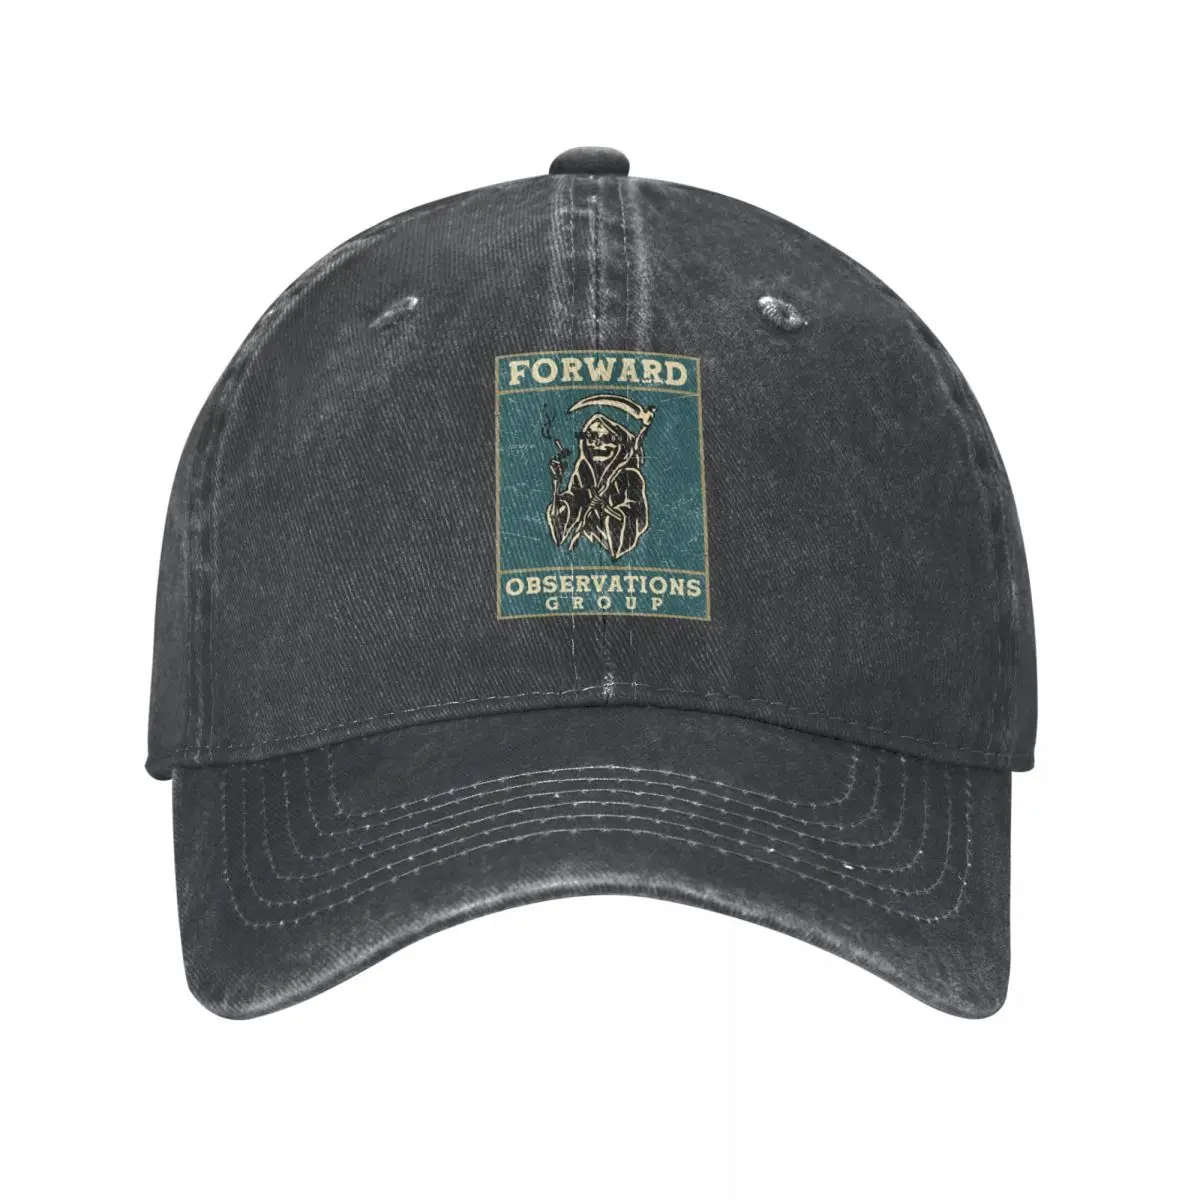 

Forward Observations Group Gbrs Men Women Baseball Caps Distressed Cotton Caps Hat Vintage Outdoor Summer Snapback Cap